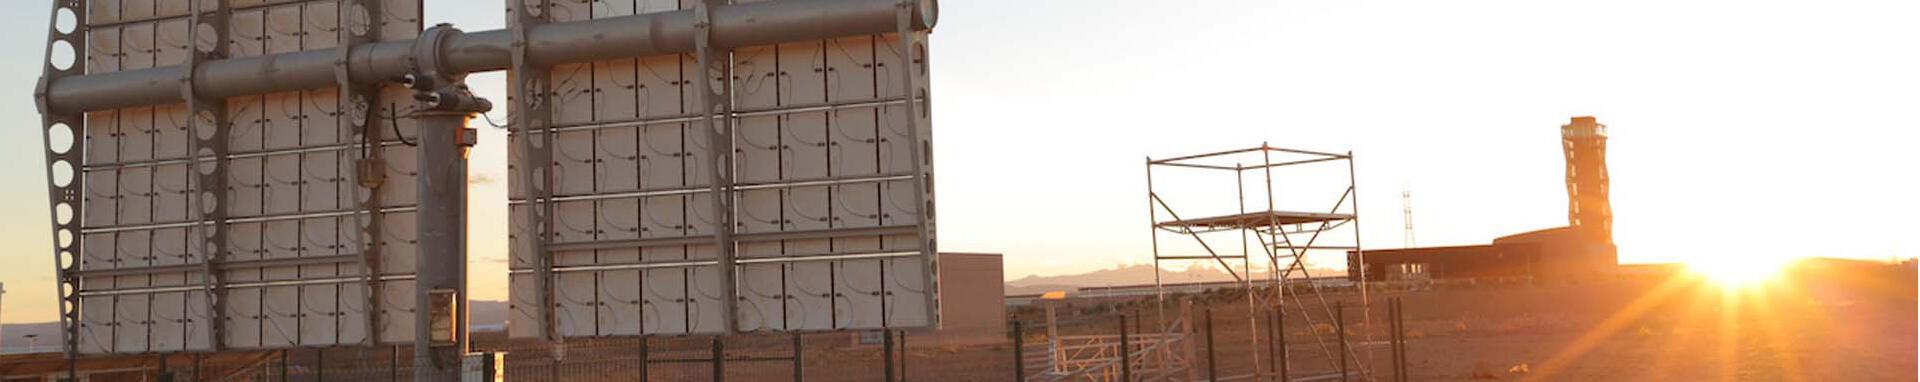 CIF Action NOOR concentrated solar power plant, Morocco. Copyright CIF 2018